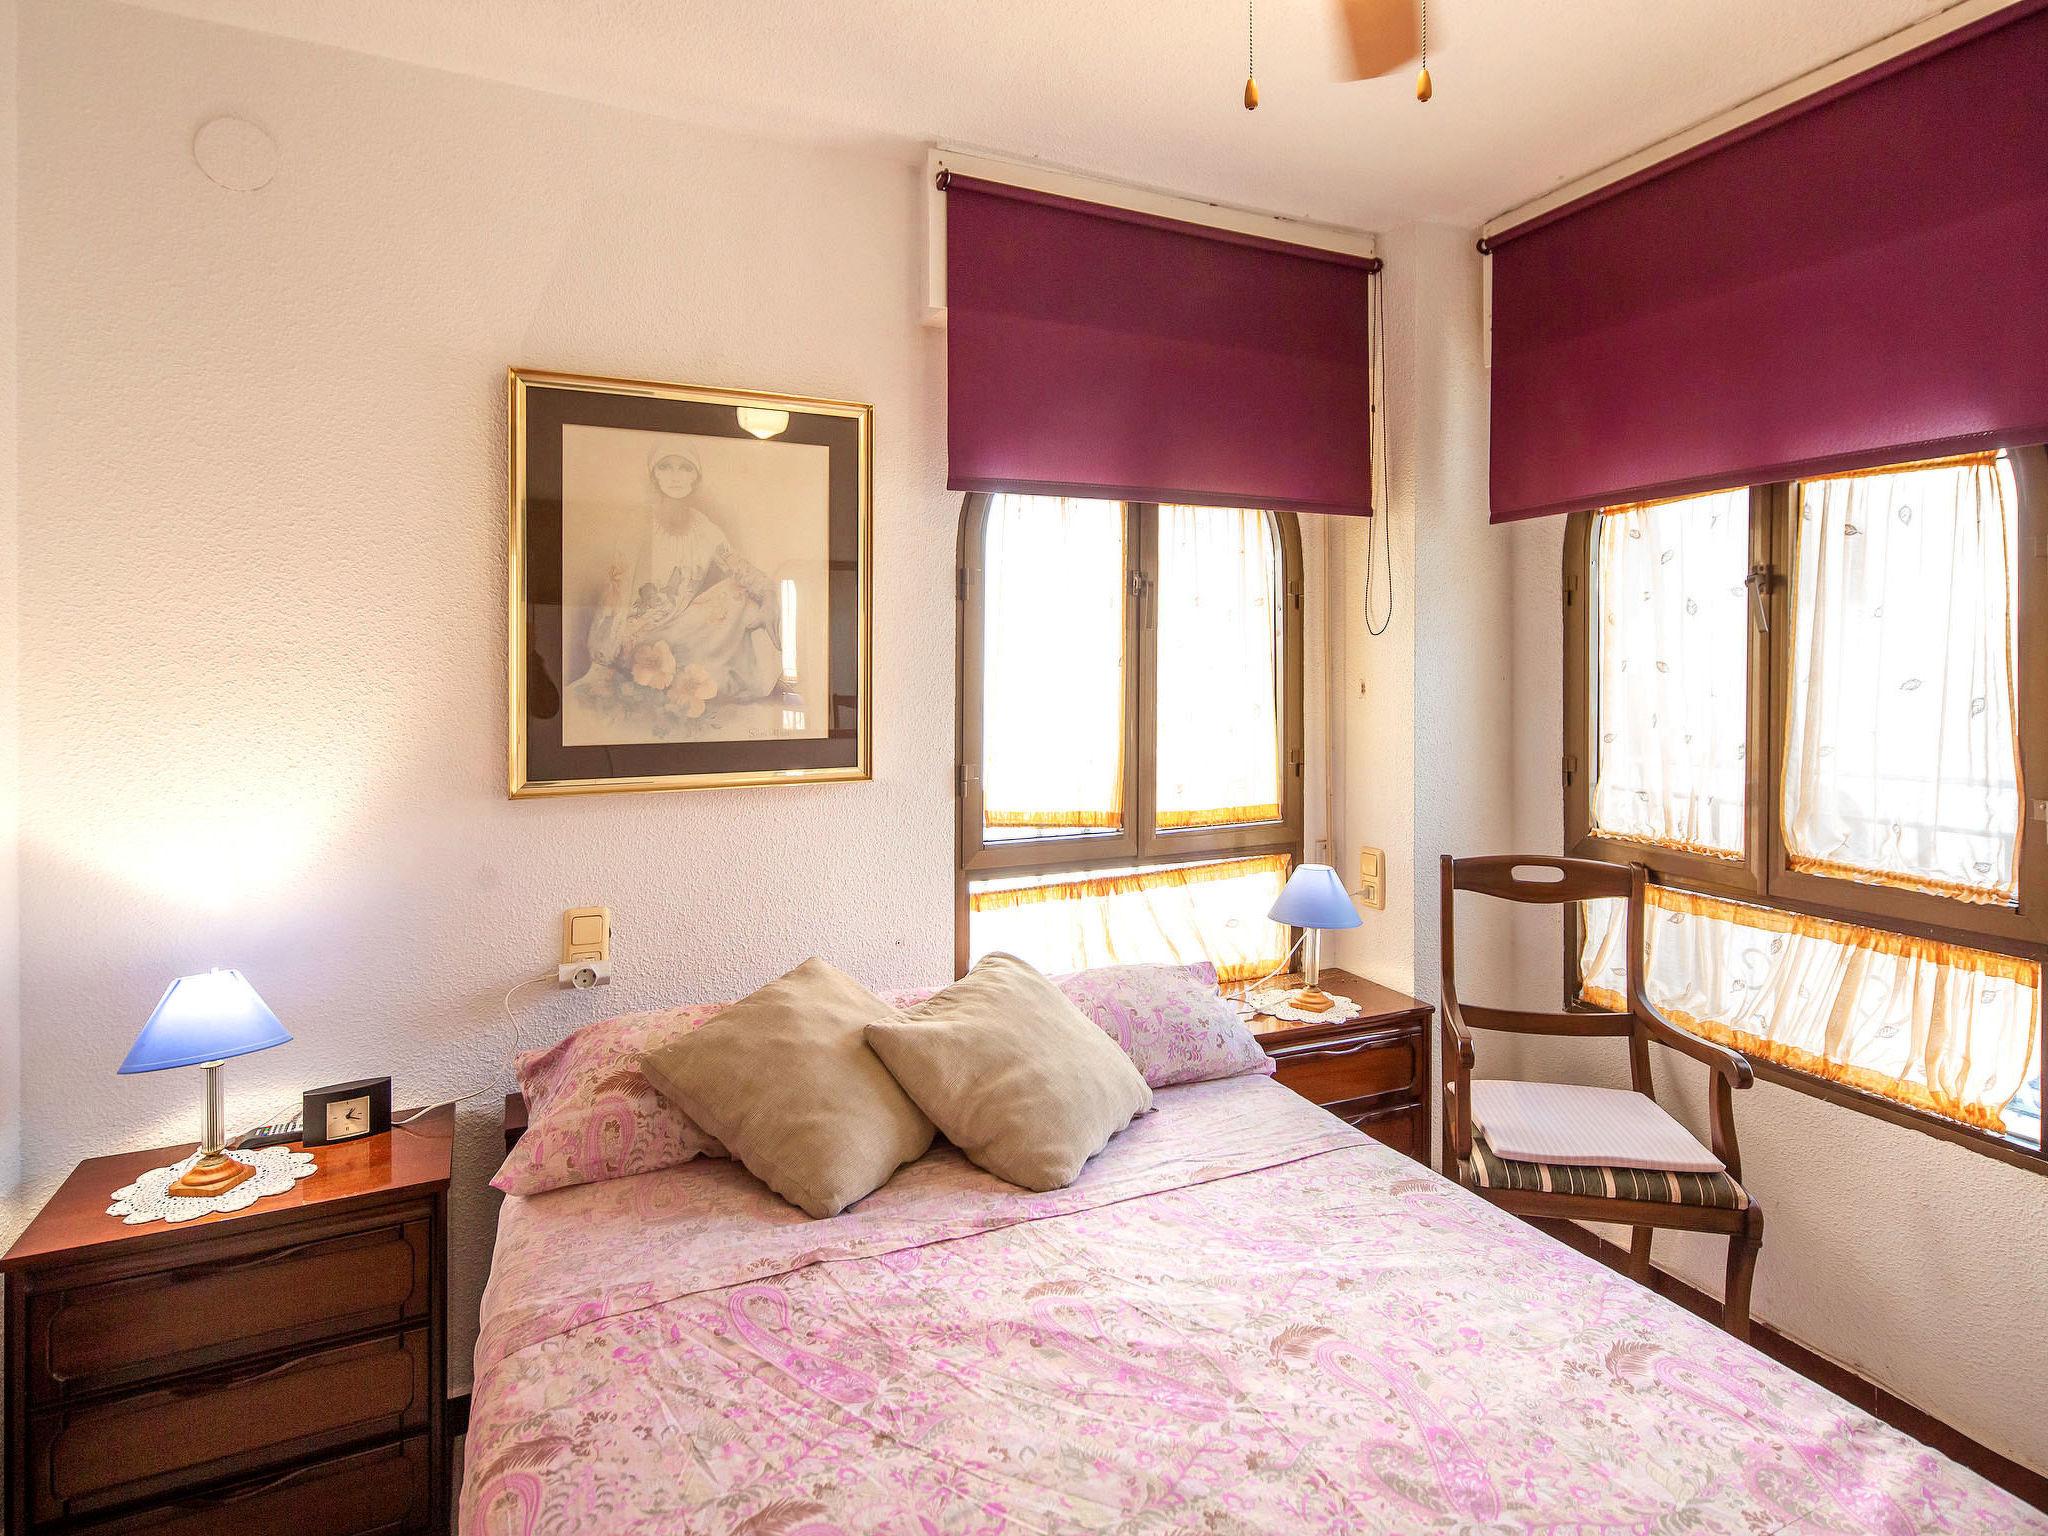 Photo 10 - Appartement de 2 chambres à Oropesa del Mar avec jardin et vues à la mer